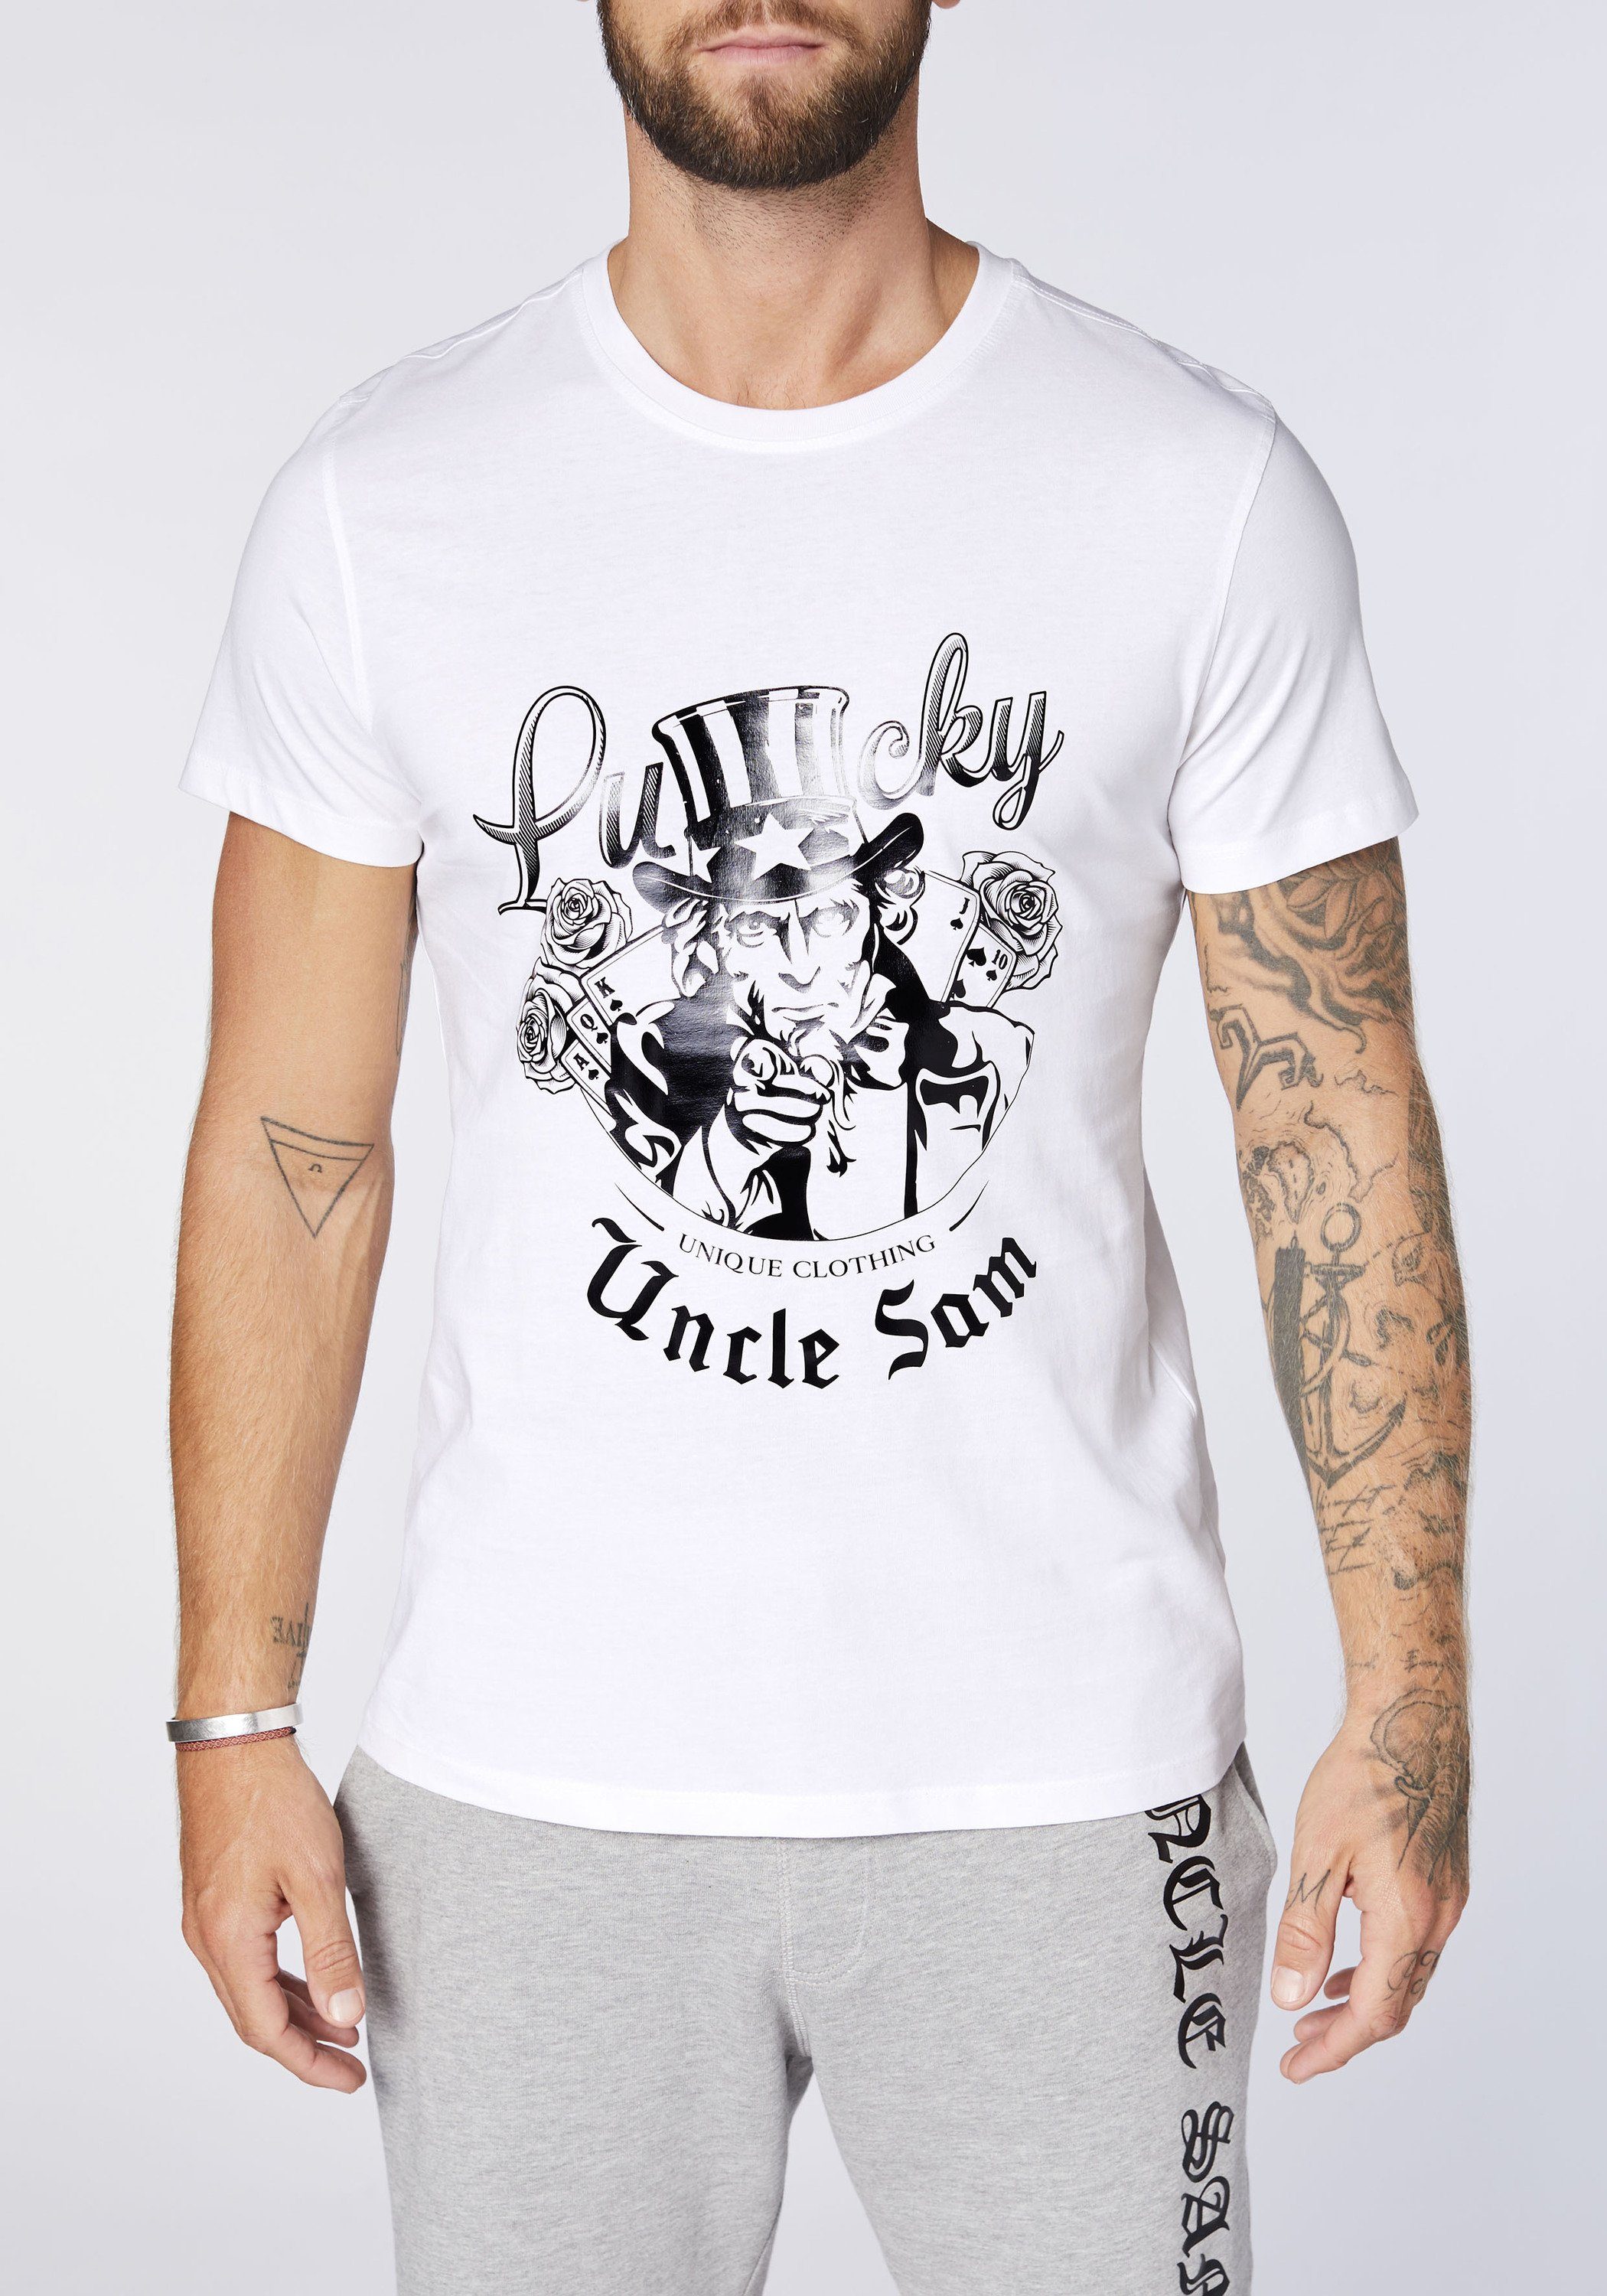 mit Sam Print-Shirt Frontprint White 11-0601 Uncle Bright